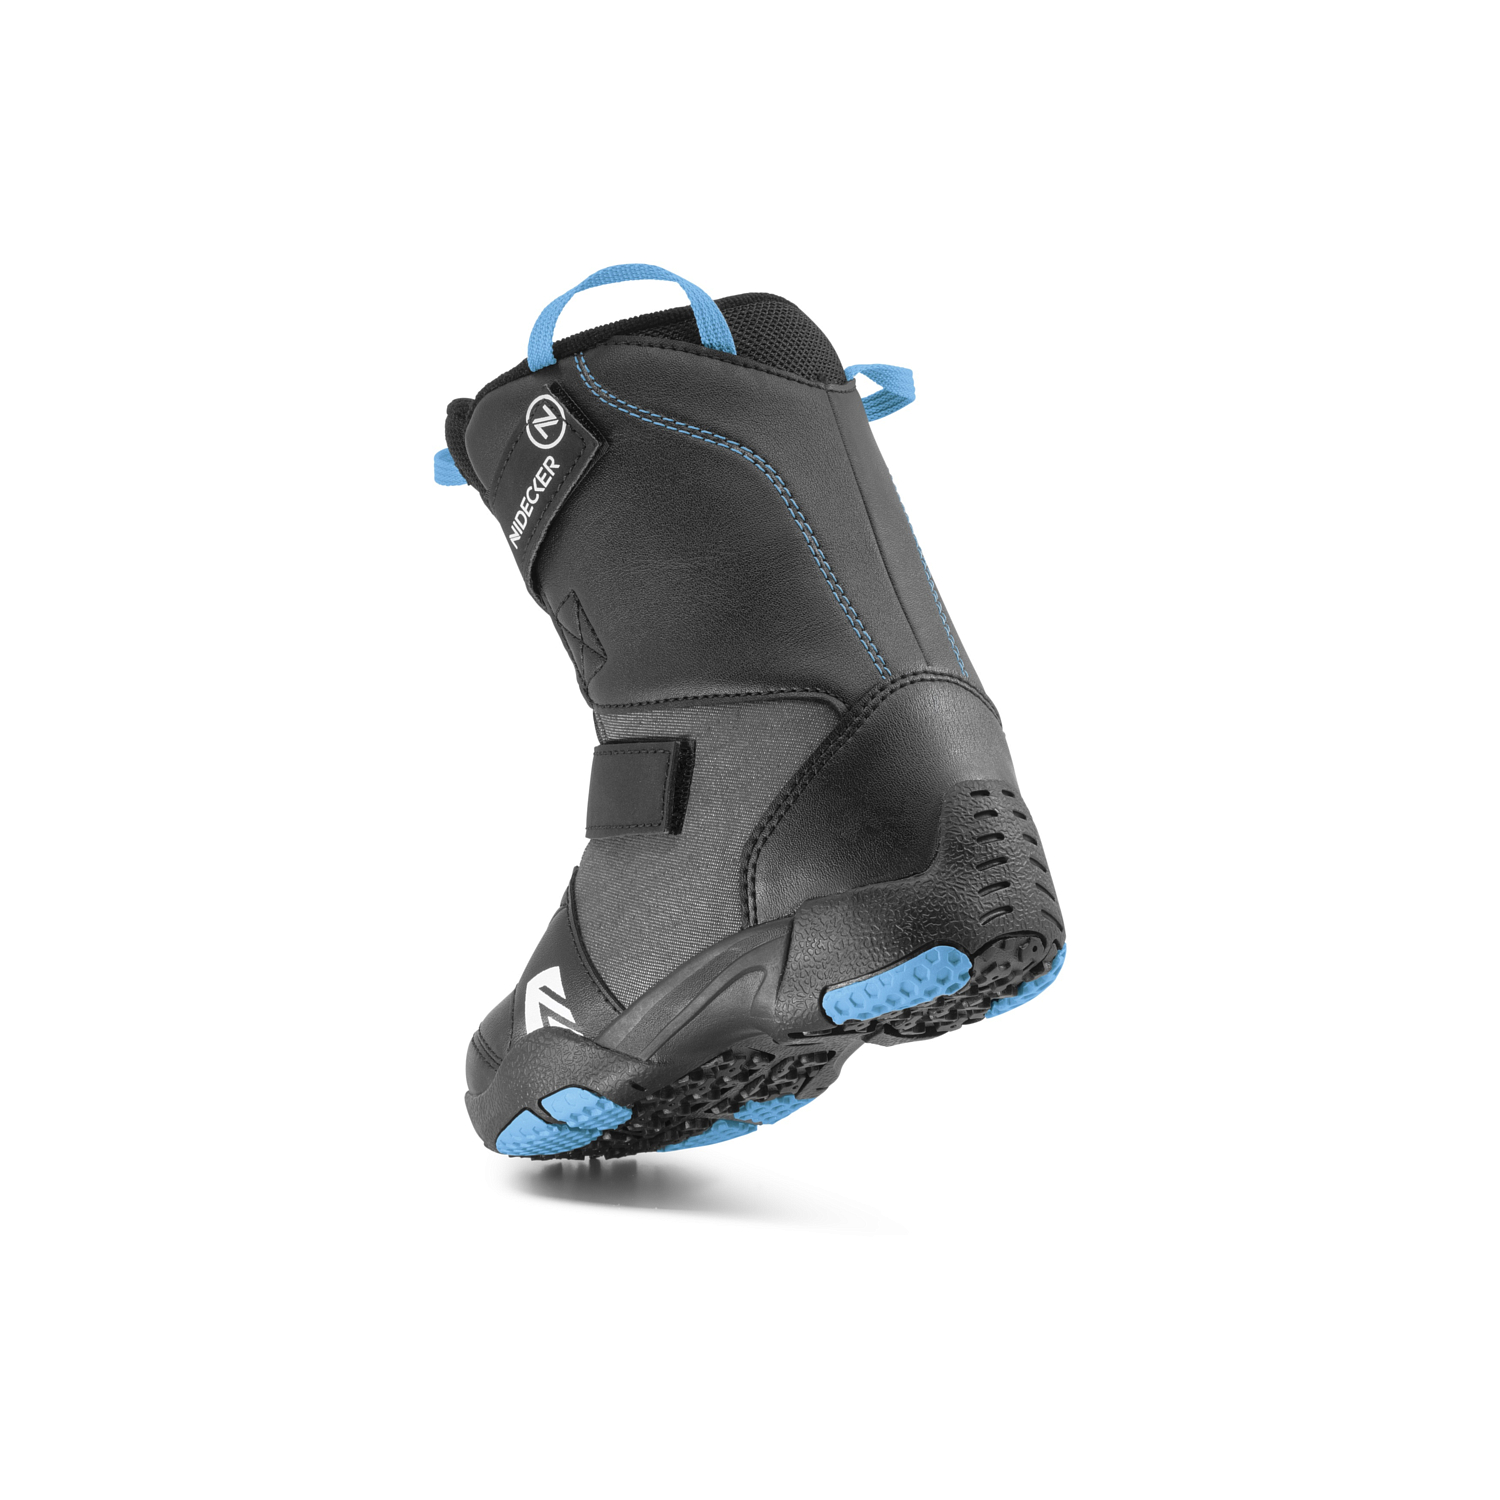 Ботинки для сноуборда детские NIDECKER 2019-20 Micron mini Black